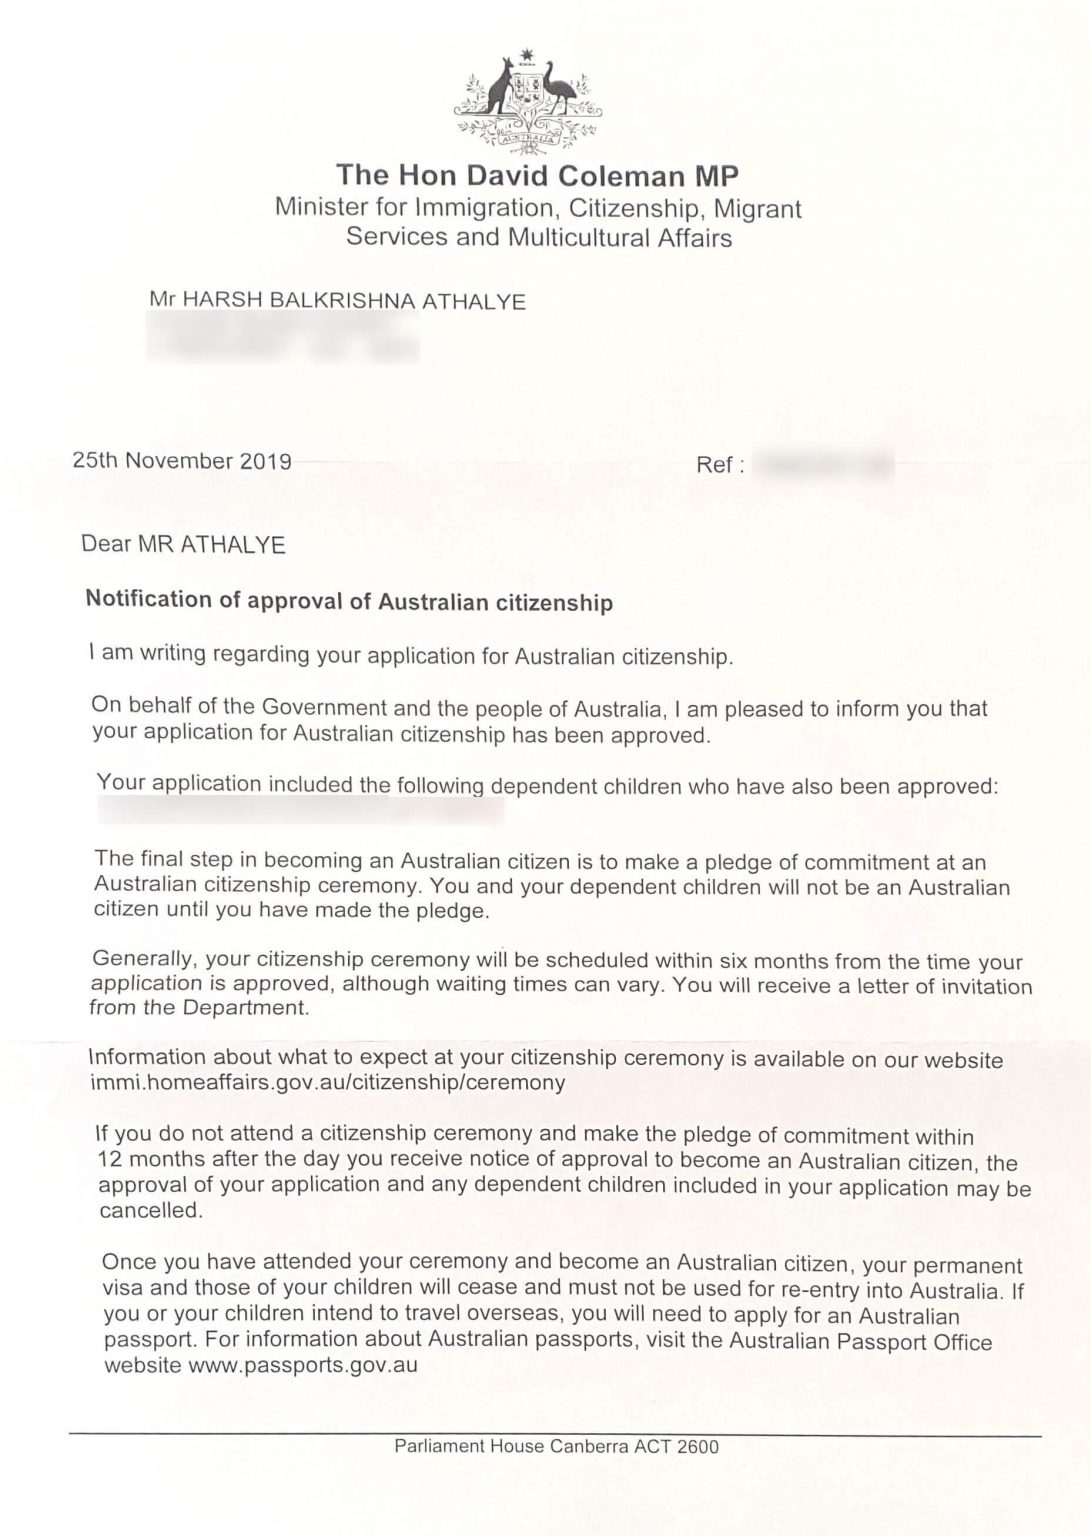 The Australian Citizenship Test My Experience Aussian